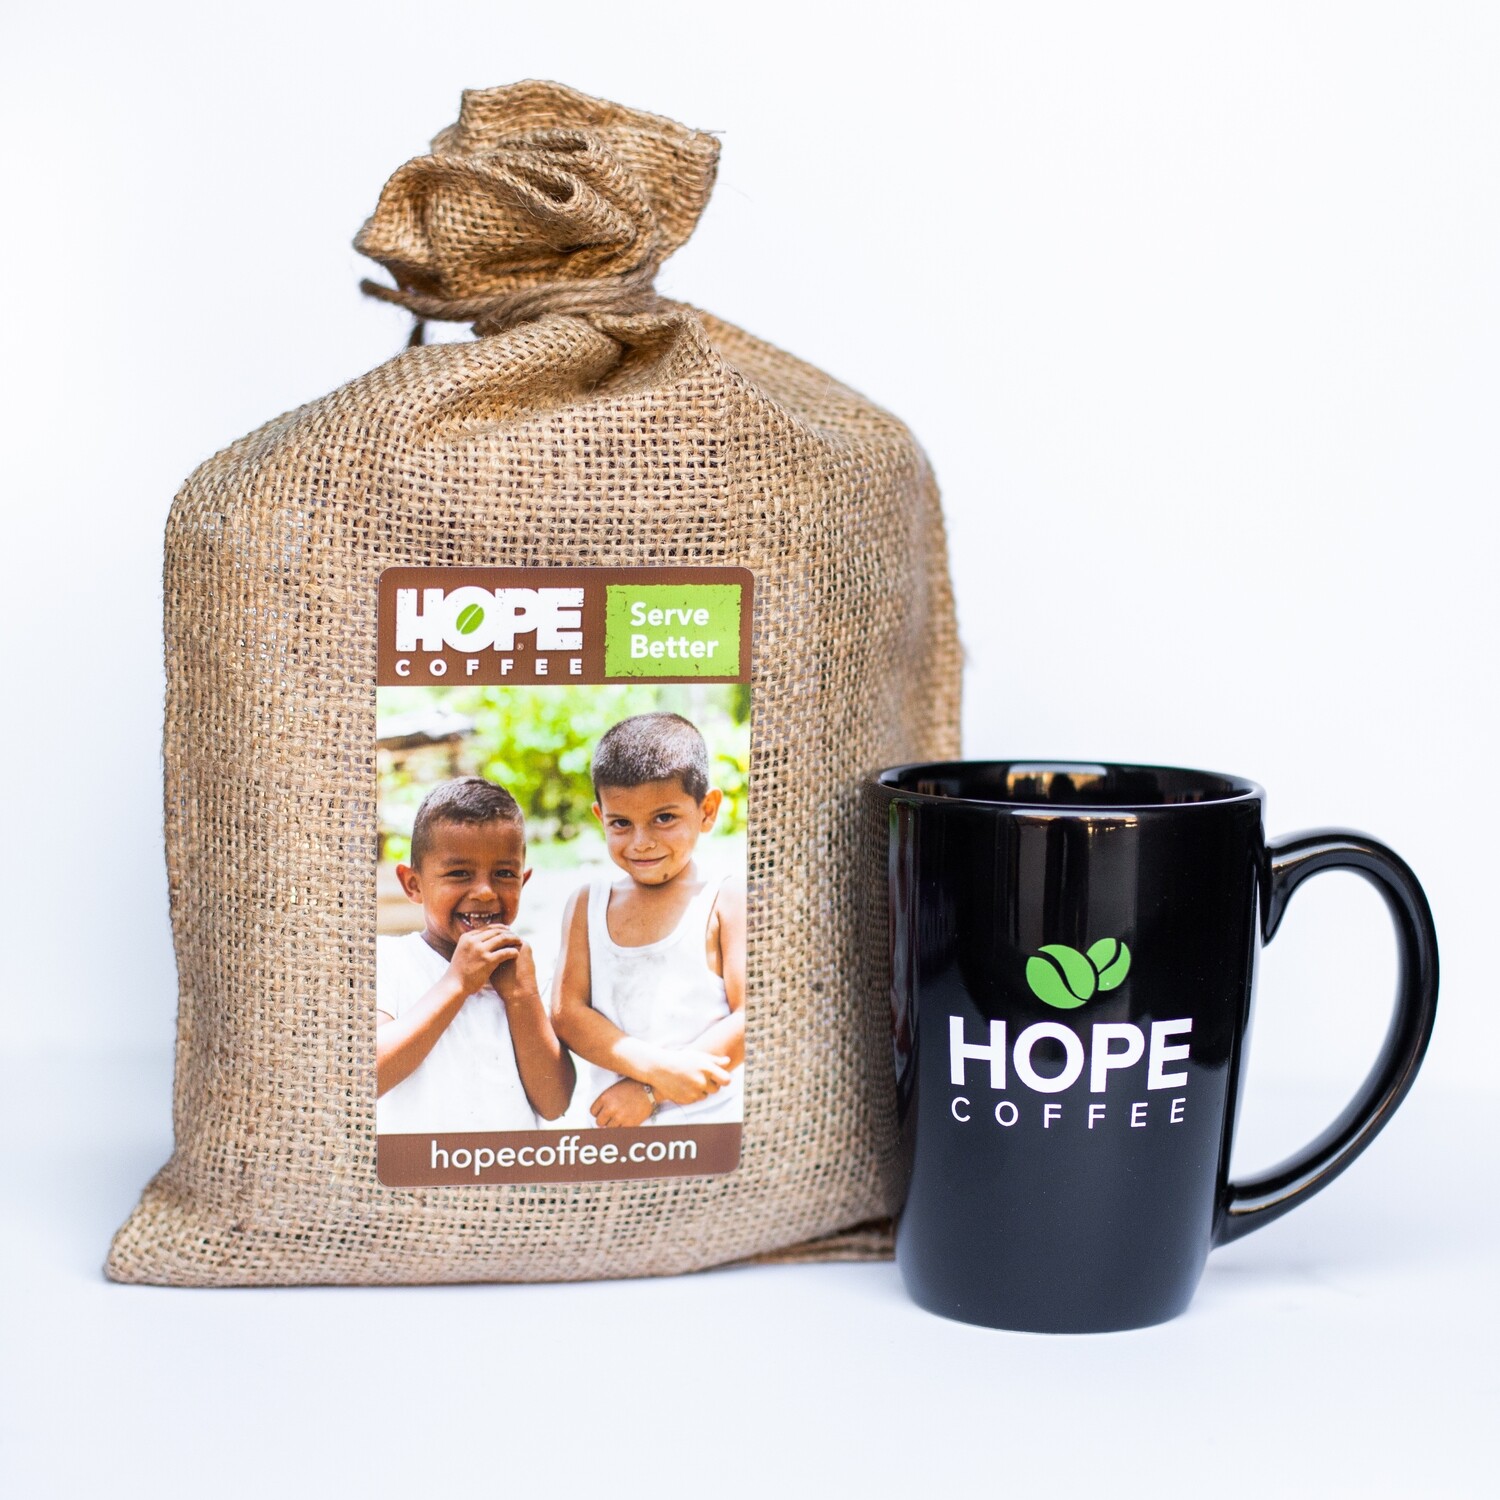 HOPE Coffee Mug and Coffee Sample Pack starting at